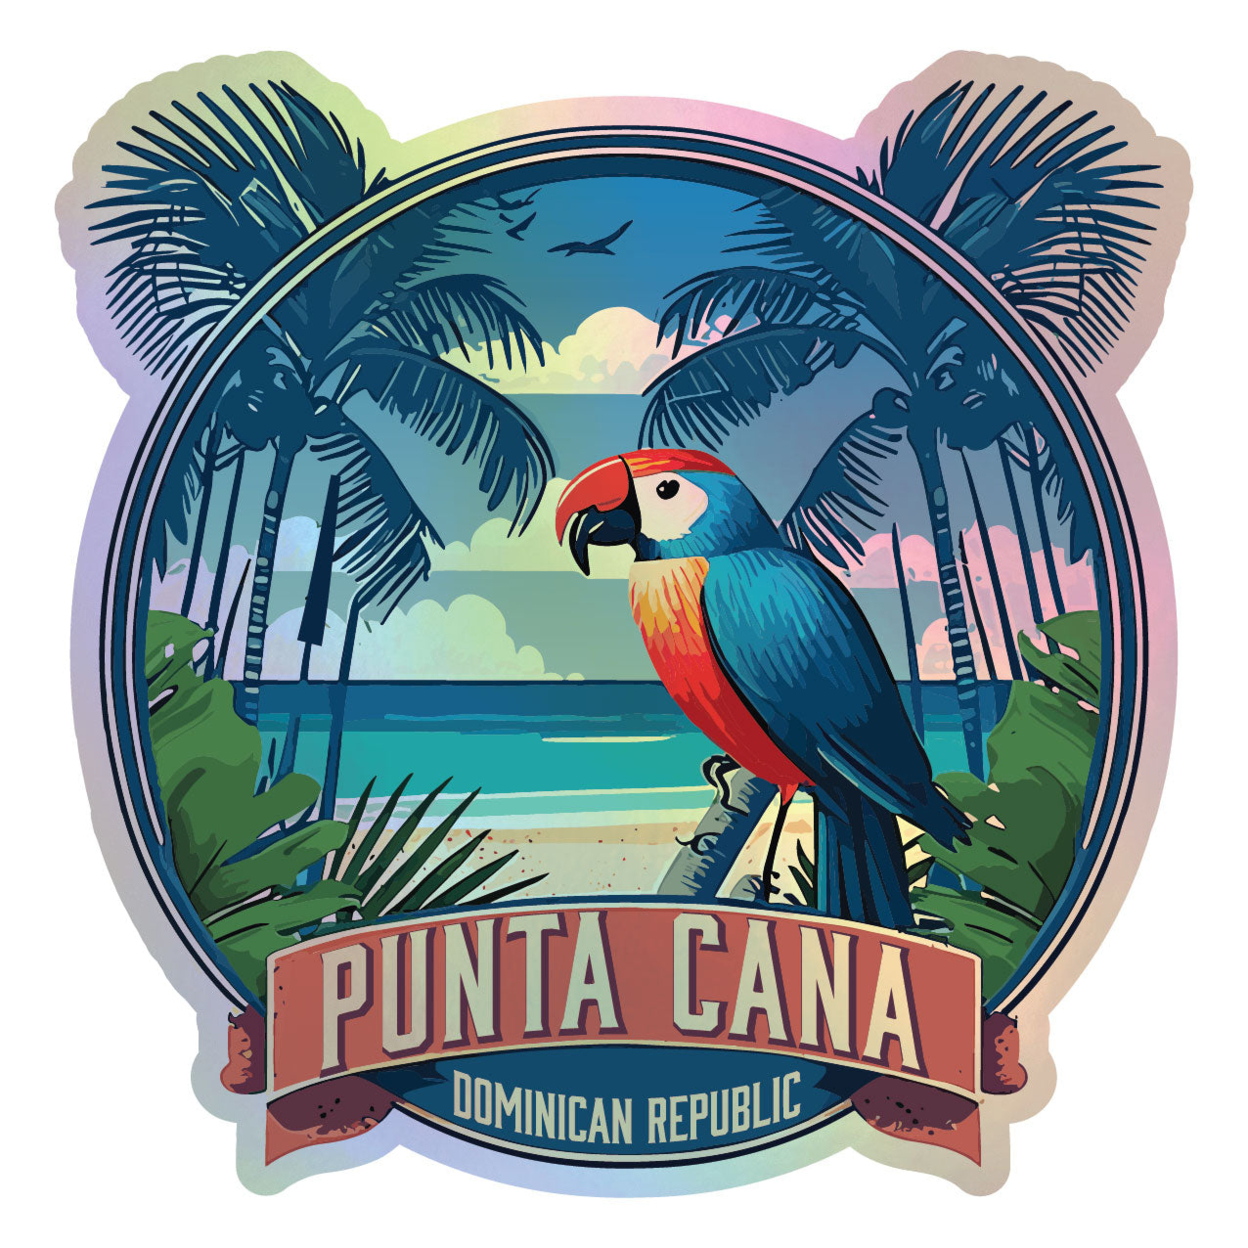 Punta Cana Dominican Republic Holographic Souvenir Vinyl Decal Sticker Parrot Design - 8 Inch